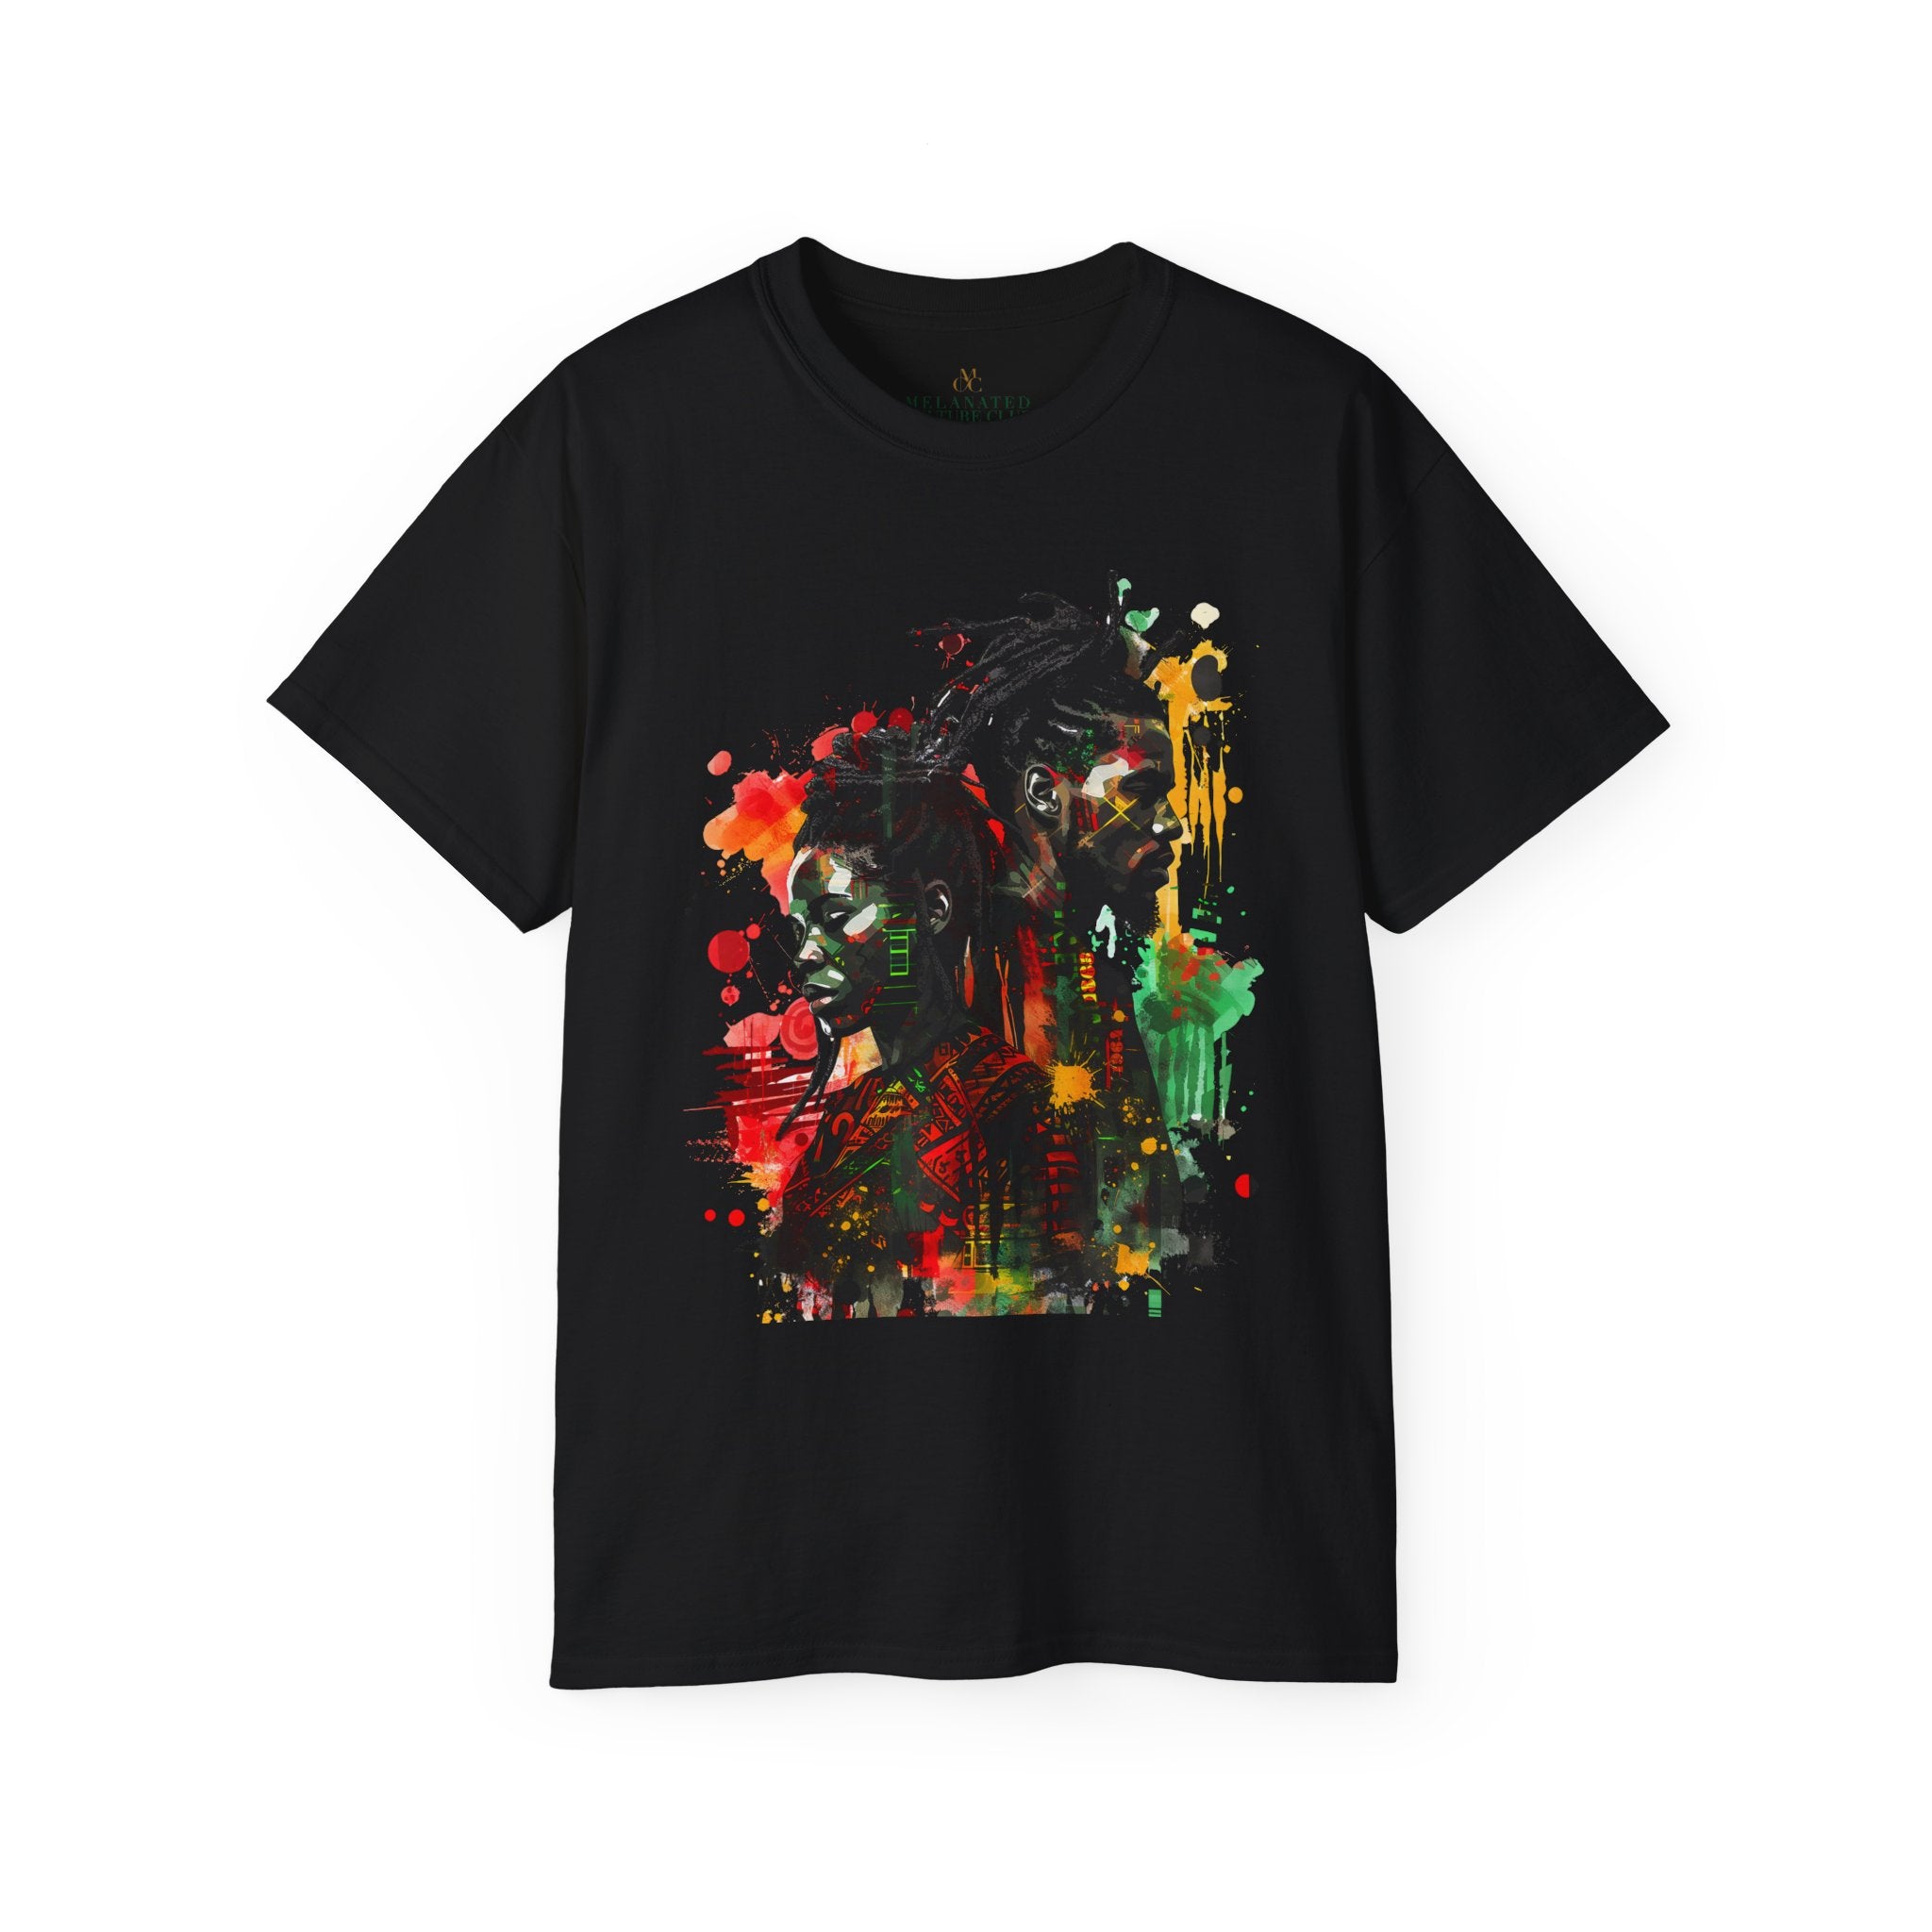 Abstract art tee shirt in black.